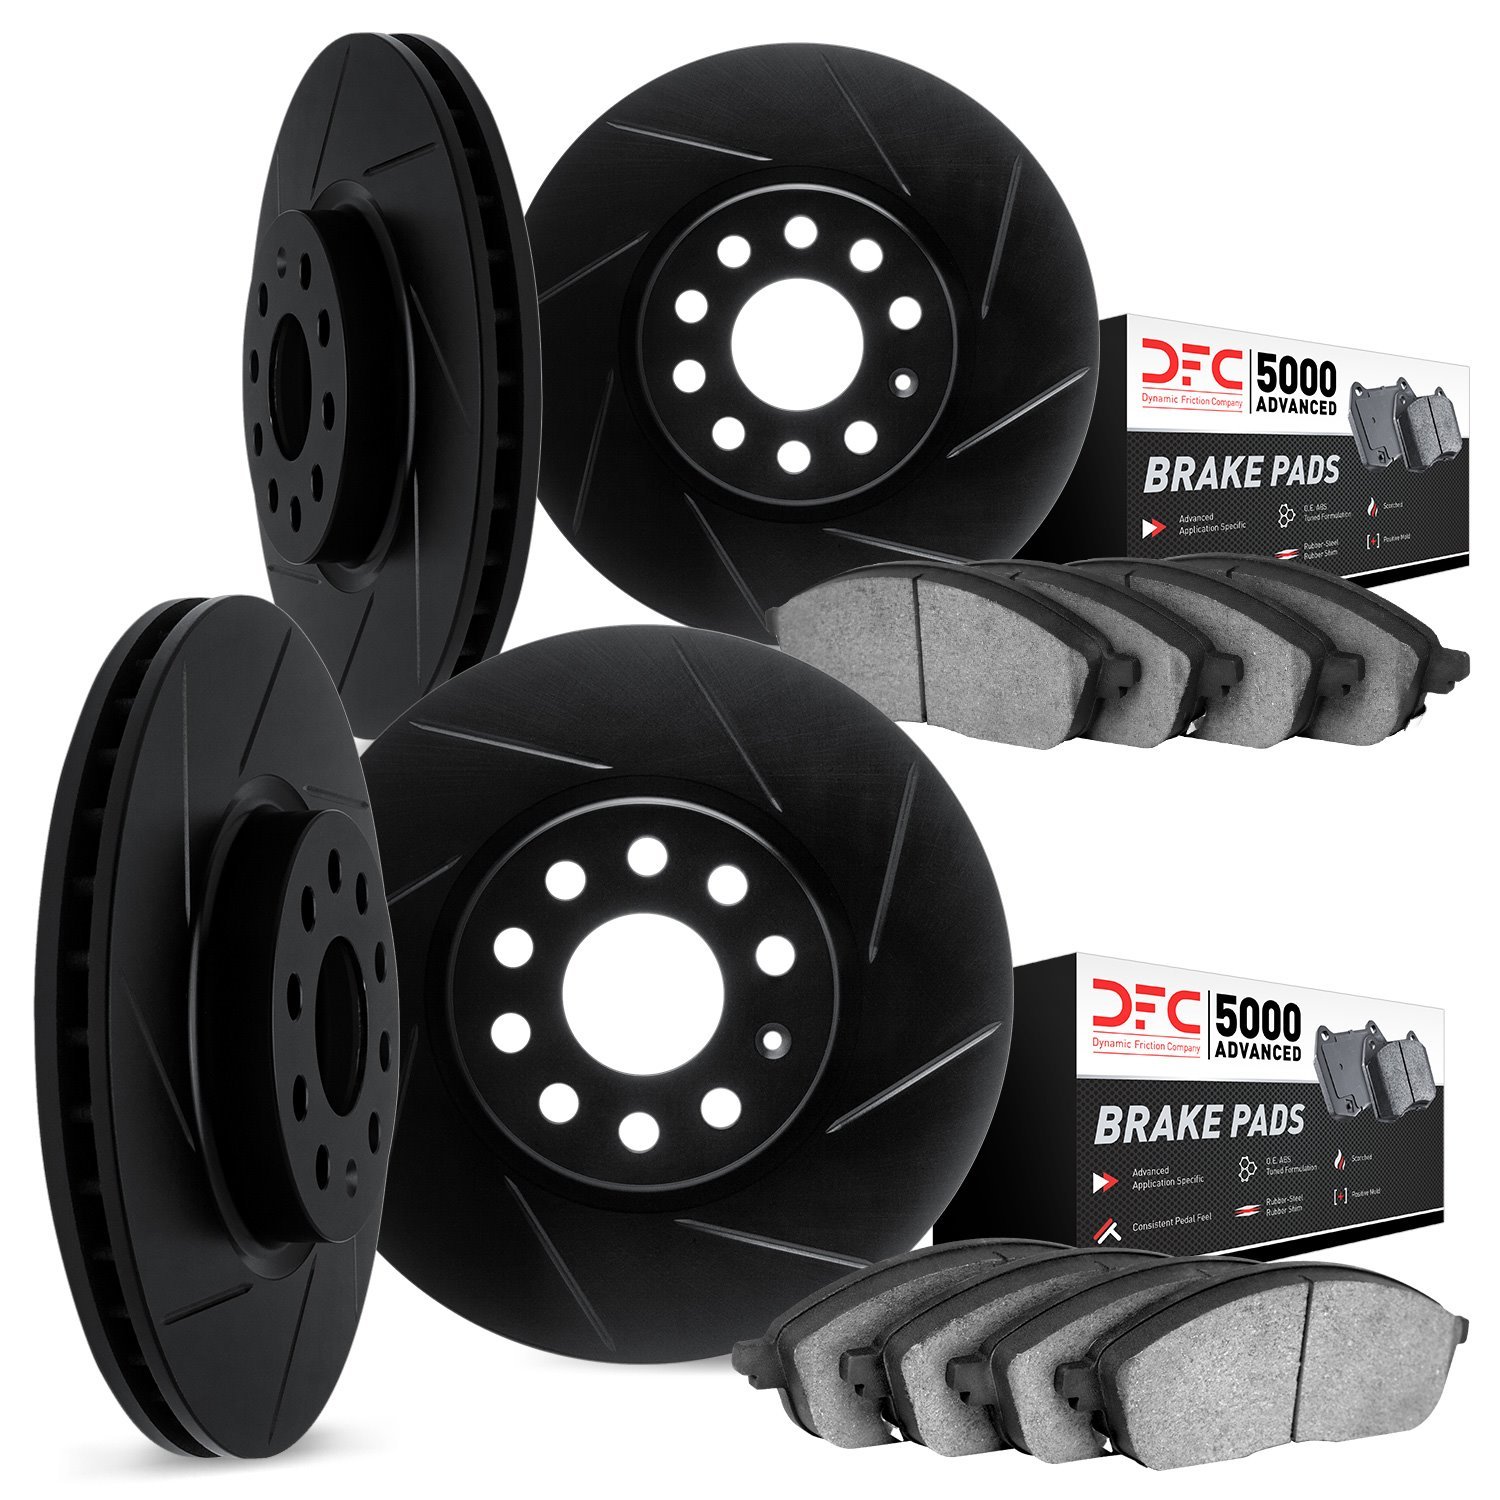 3514-67048 Slotted Brake Rotors w/5000 Advanced Brake Pads Kit & Hardware [Black], 2011-2019 Infiniti/Nissan, Position: Front an